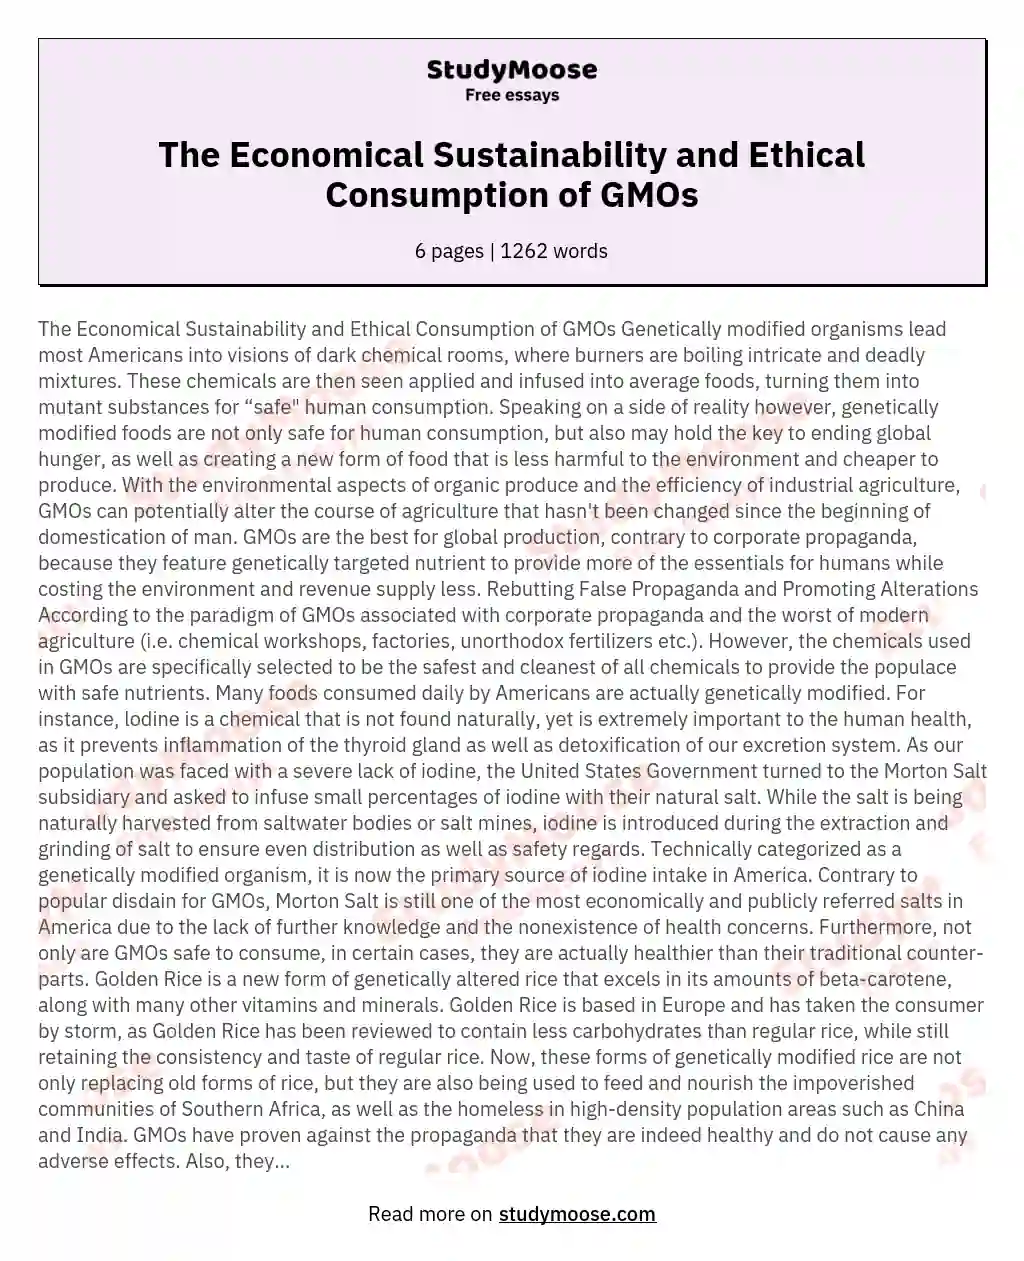 essay about ethical consumption